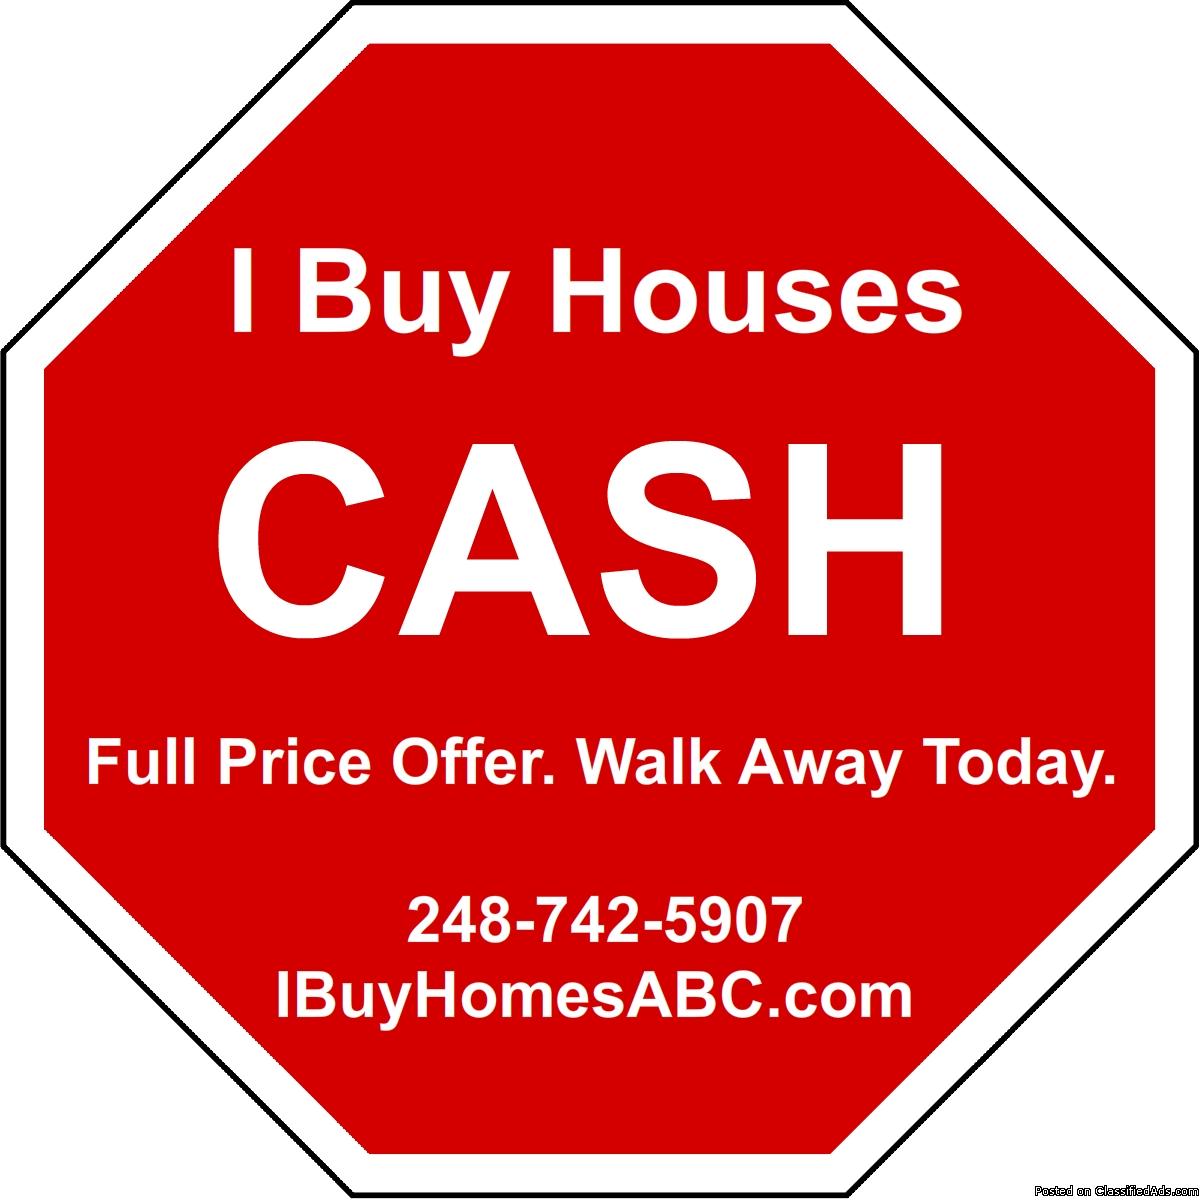 I Buy Houses CASH in Oakland County Mi. Full Price Offer.